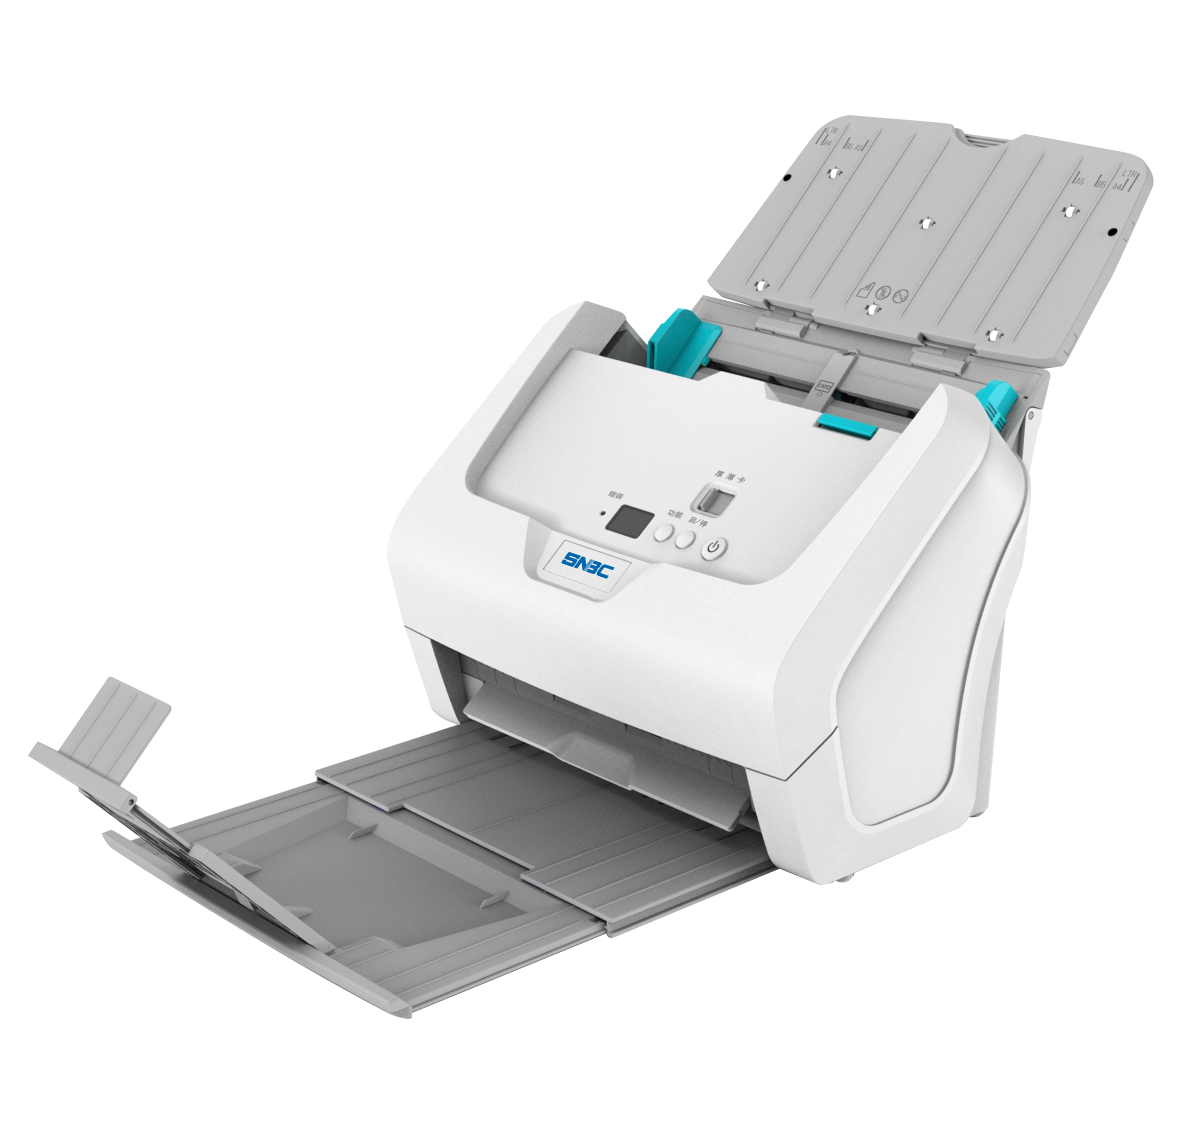 BSC-5060 High speed document scanner